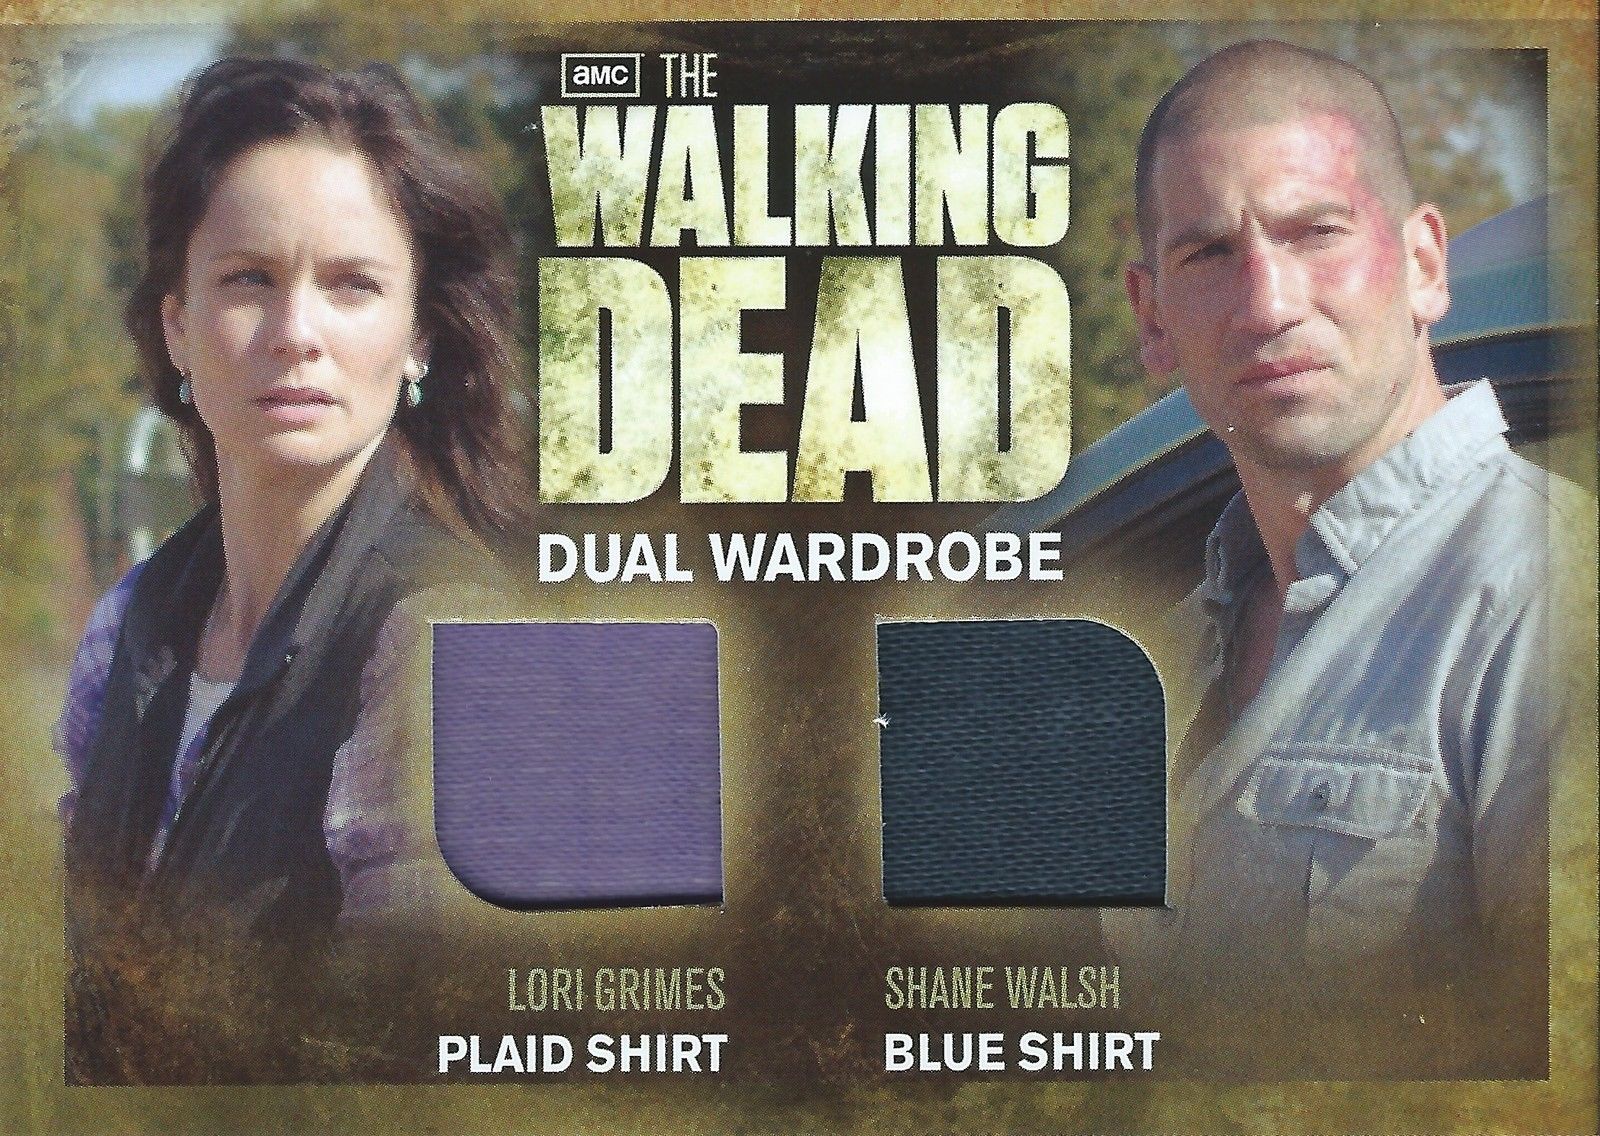  2012 AMC The Walking Dead LORI GRIMES / SHANE WALSH Dual Wardrobe Image 1